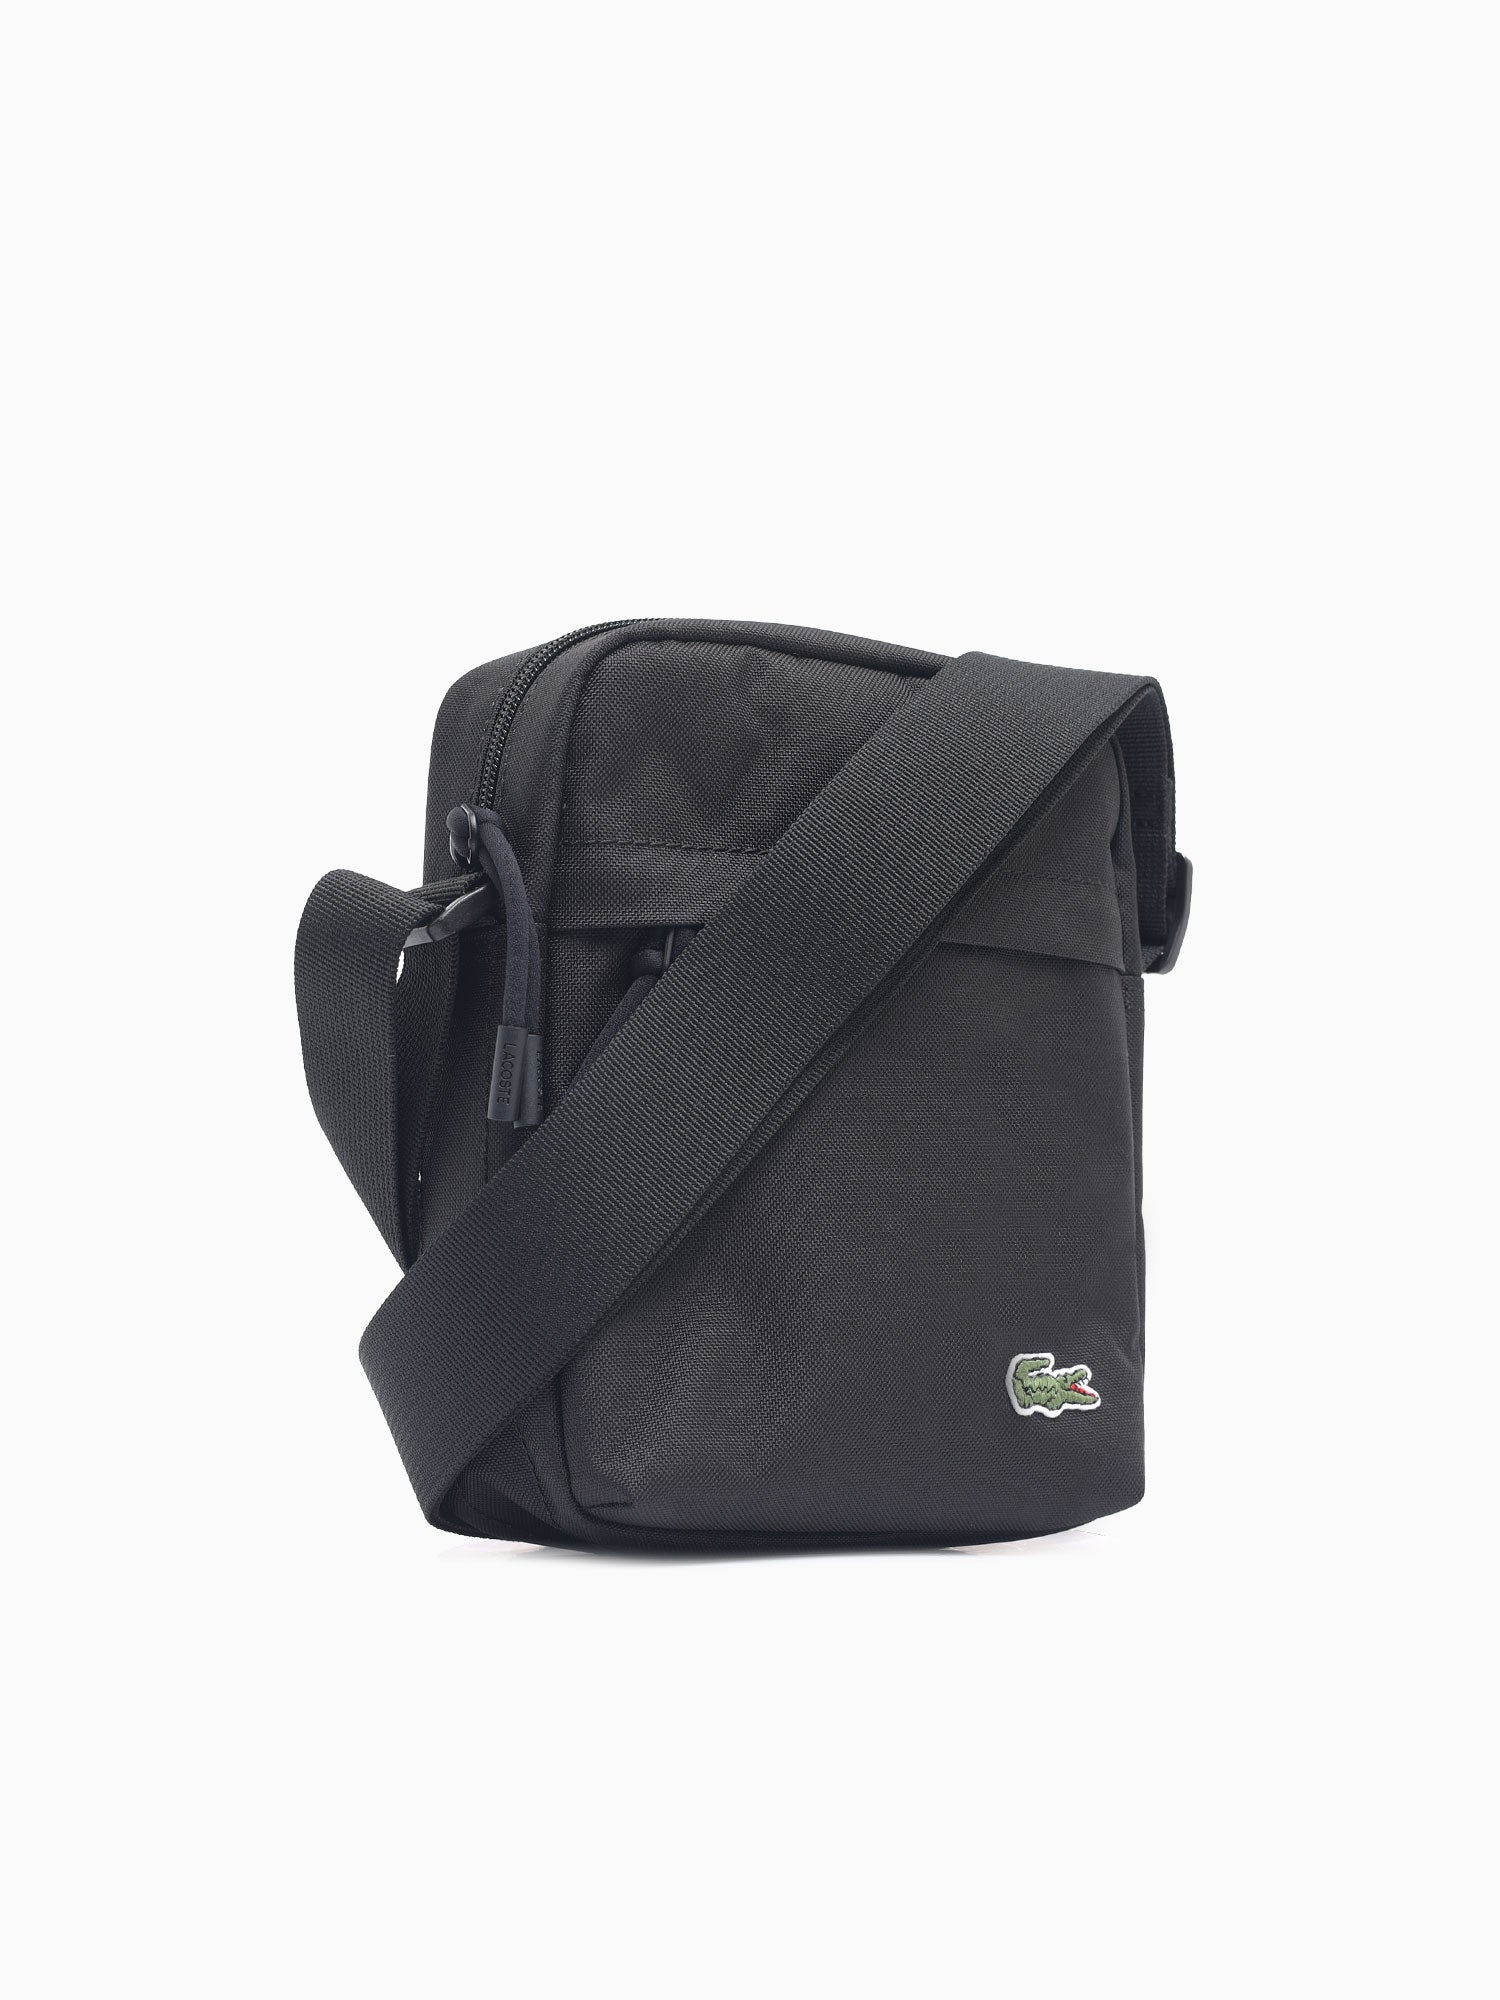 Lacoste Black Vertical Camera Bag